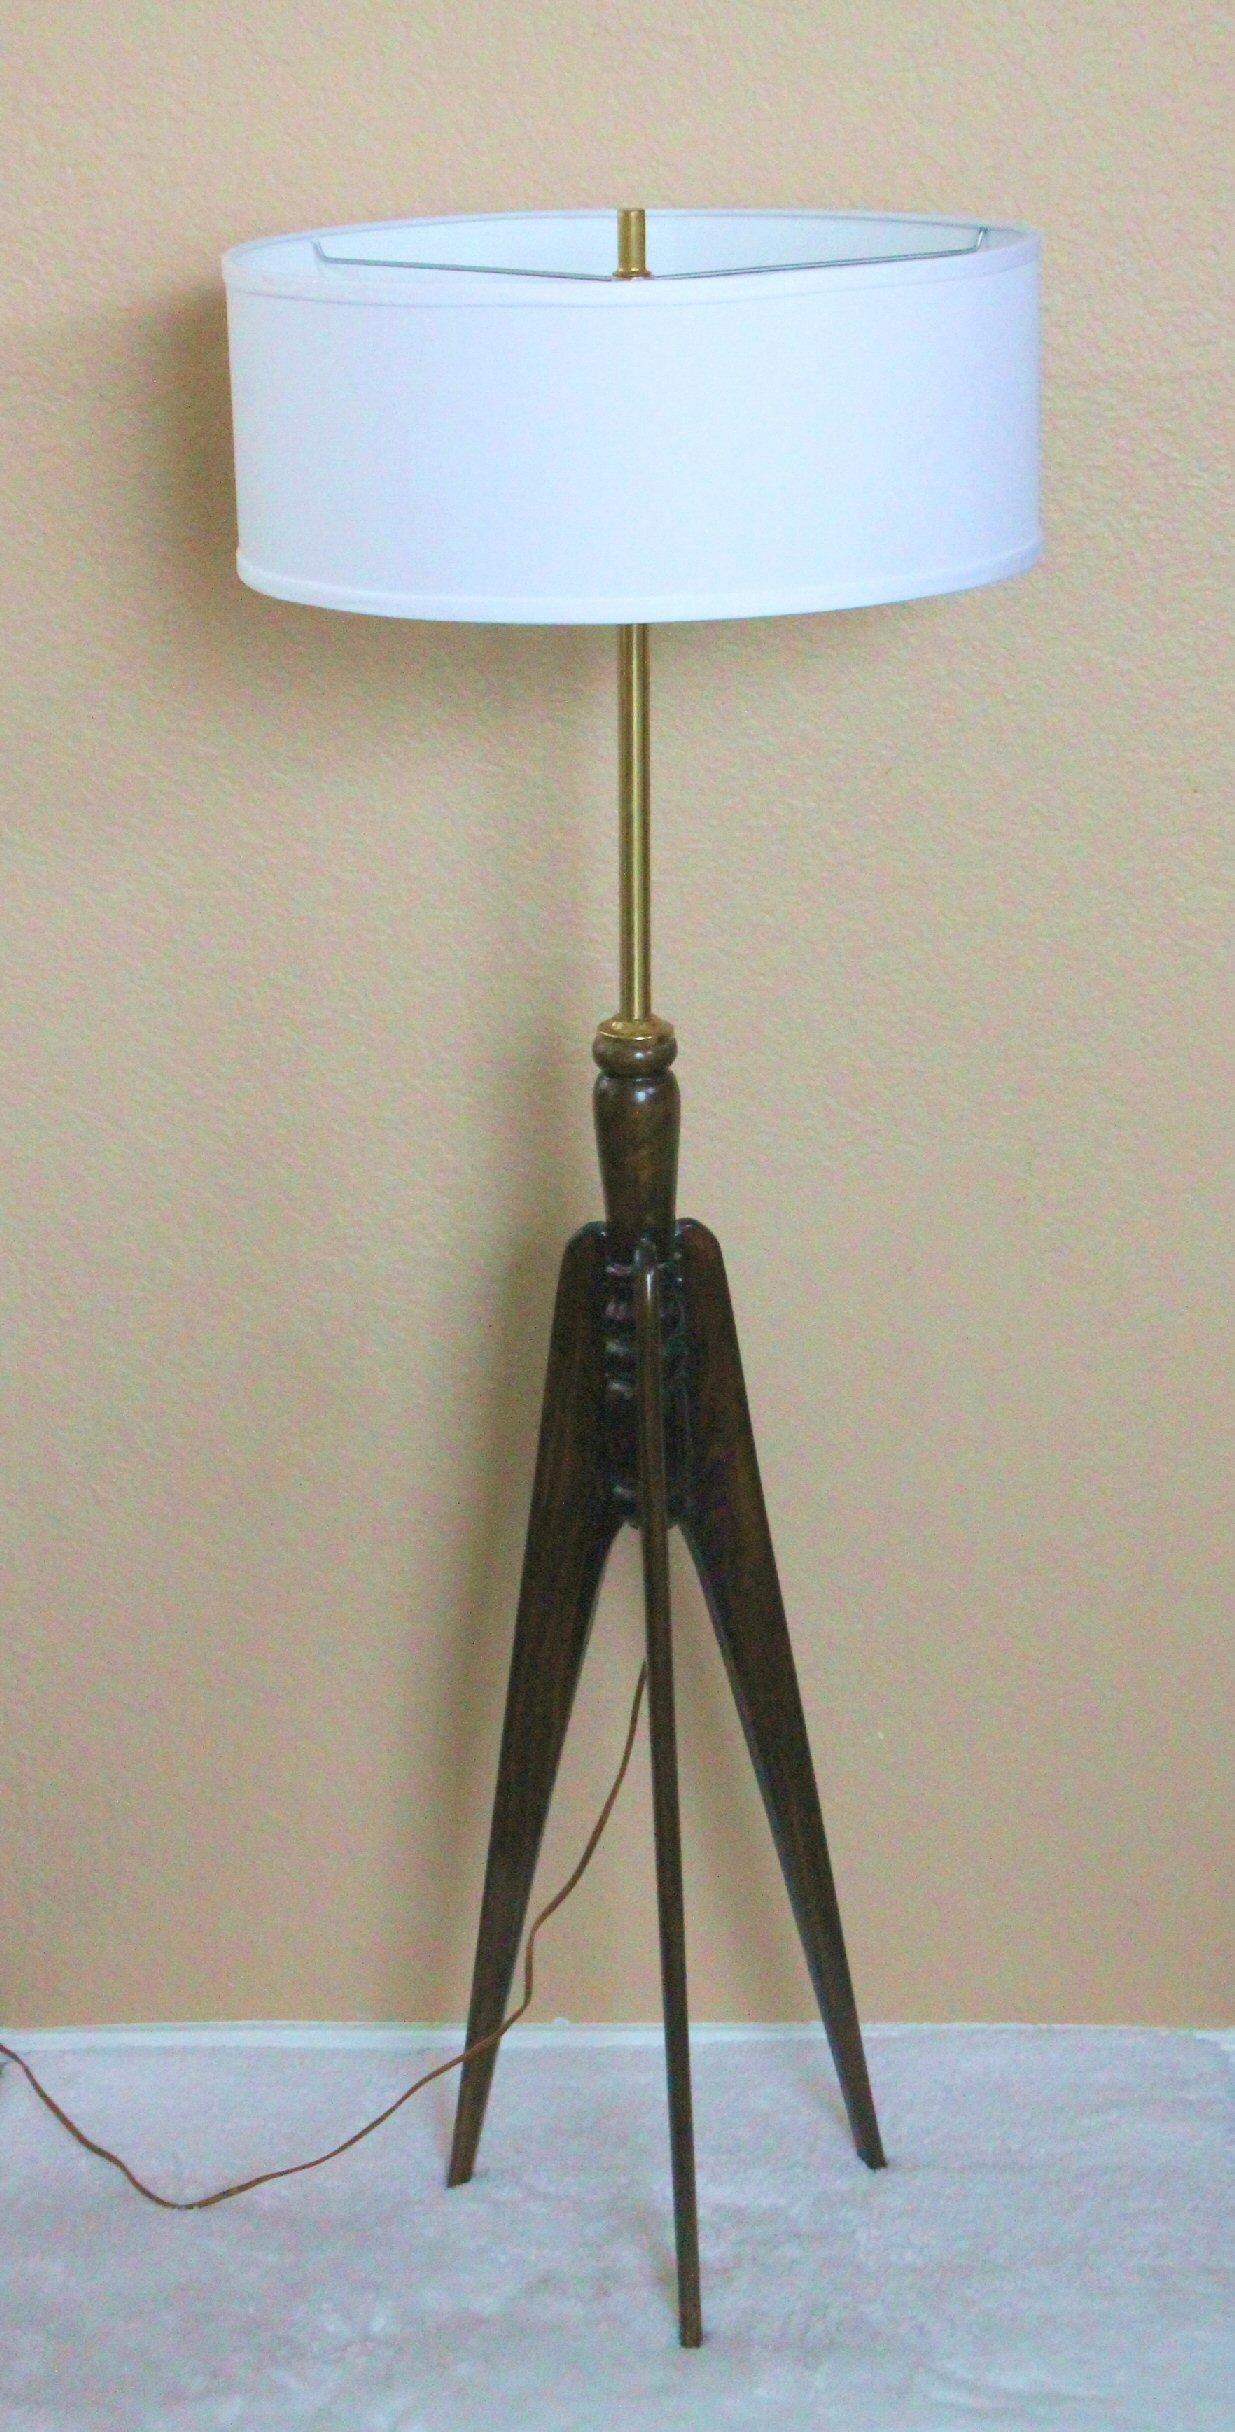 MAGNIFICENT! 

DANISH ROCKET LAMP FLOOR LAMP
FOR HANSEN
AFRICAN TEAK WOOD & BRASS ACCENTS
CRSIP WHITE LINEN SHADE

DIMENSIONS: HEIGHT 52